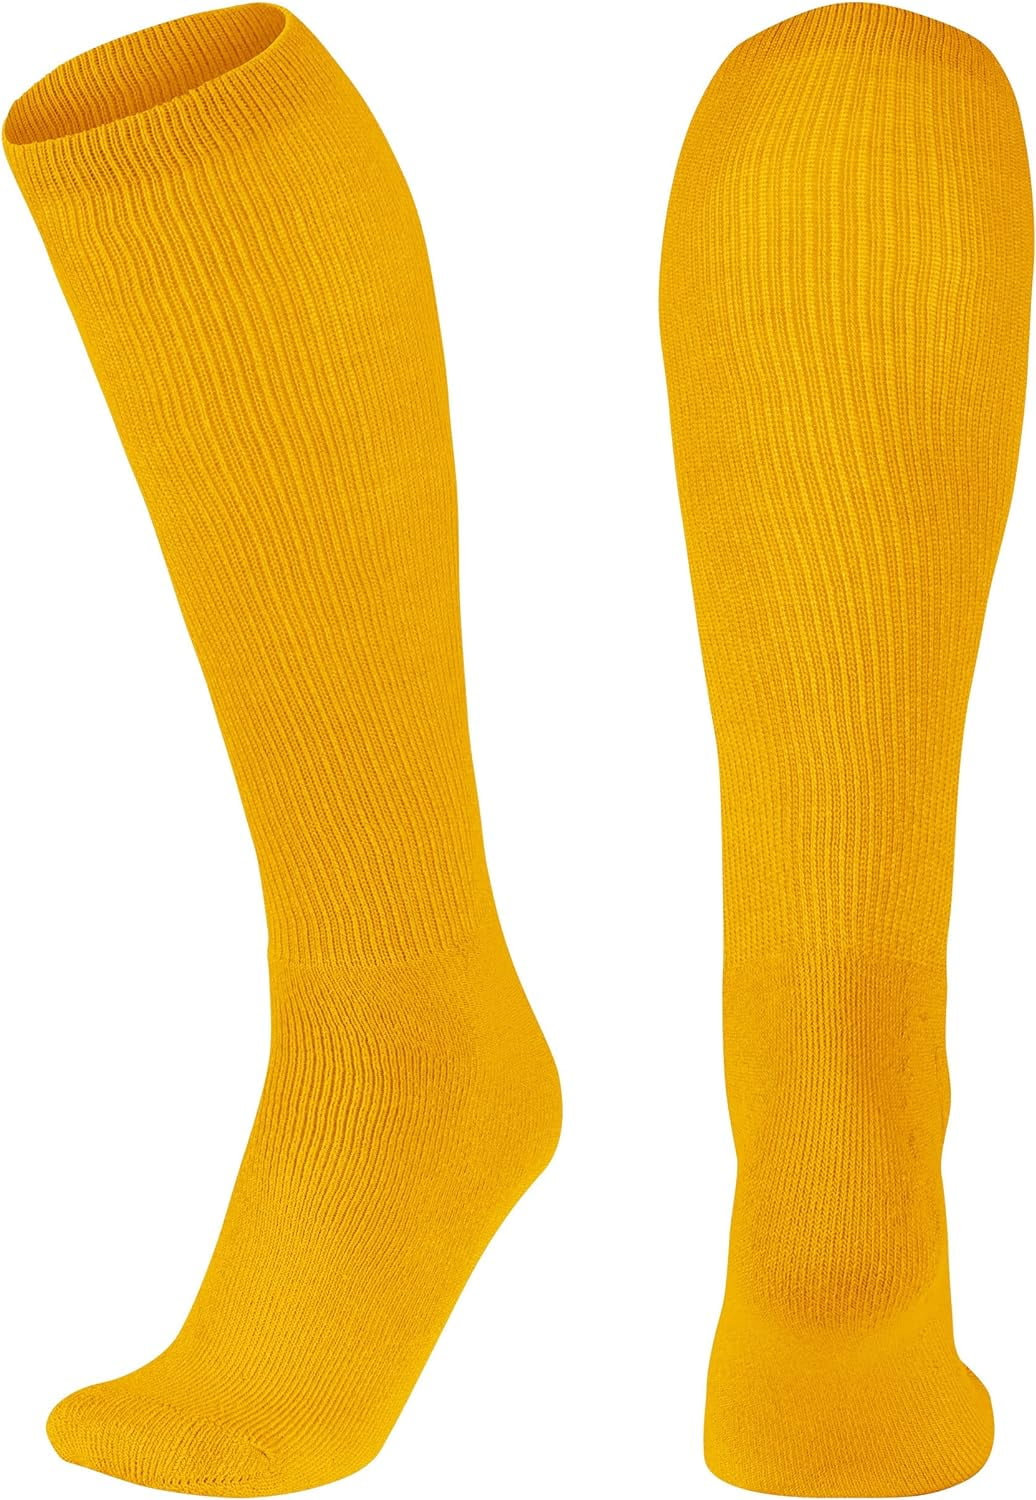 Multi-Sport Athletic Socks, 1 Pair, Small, Orange 